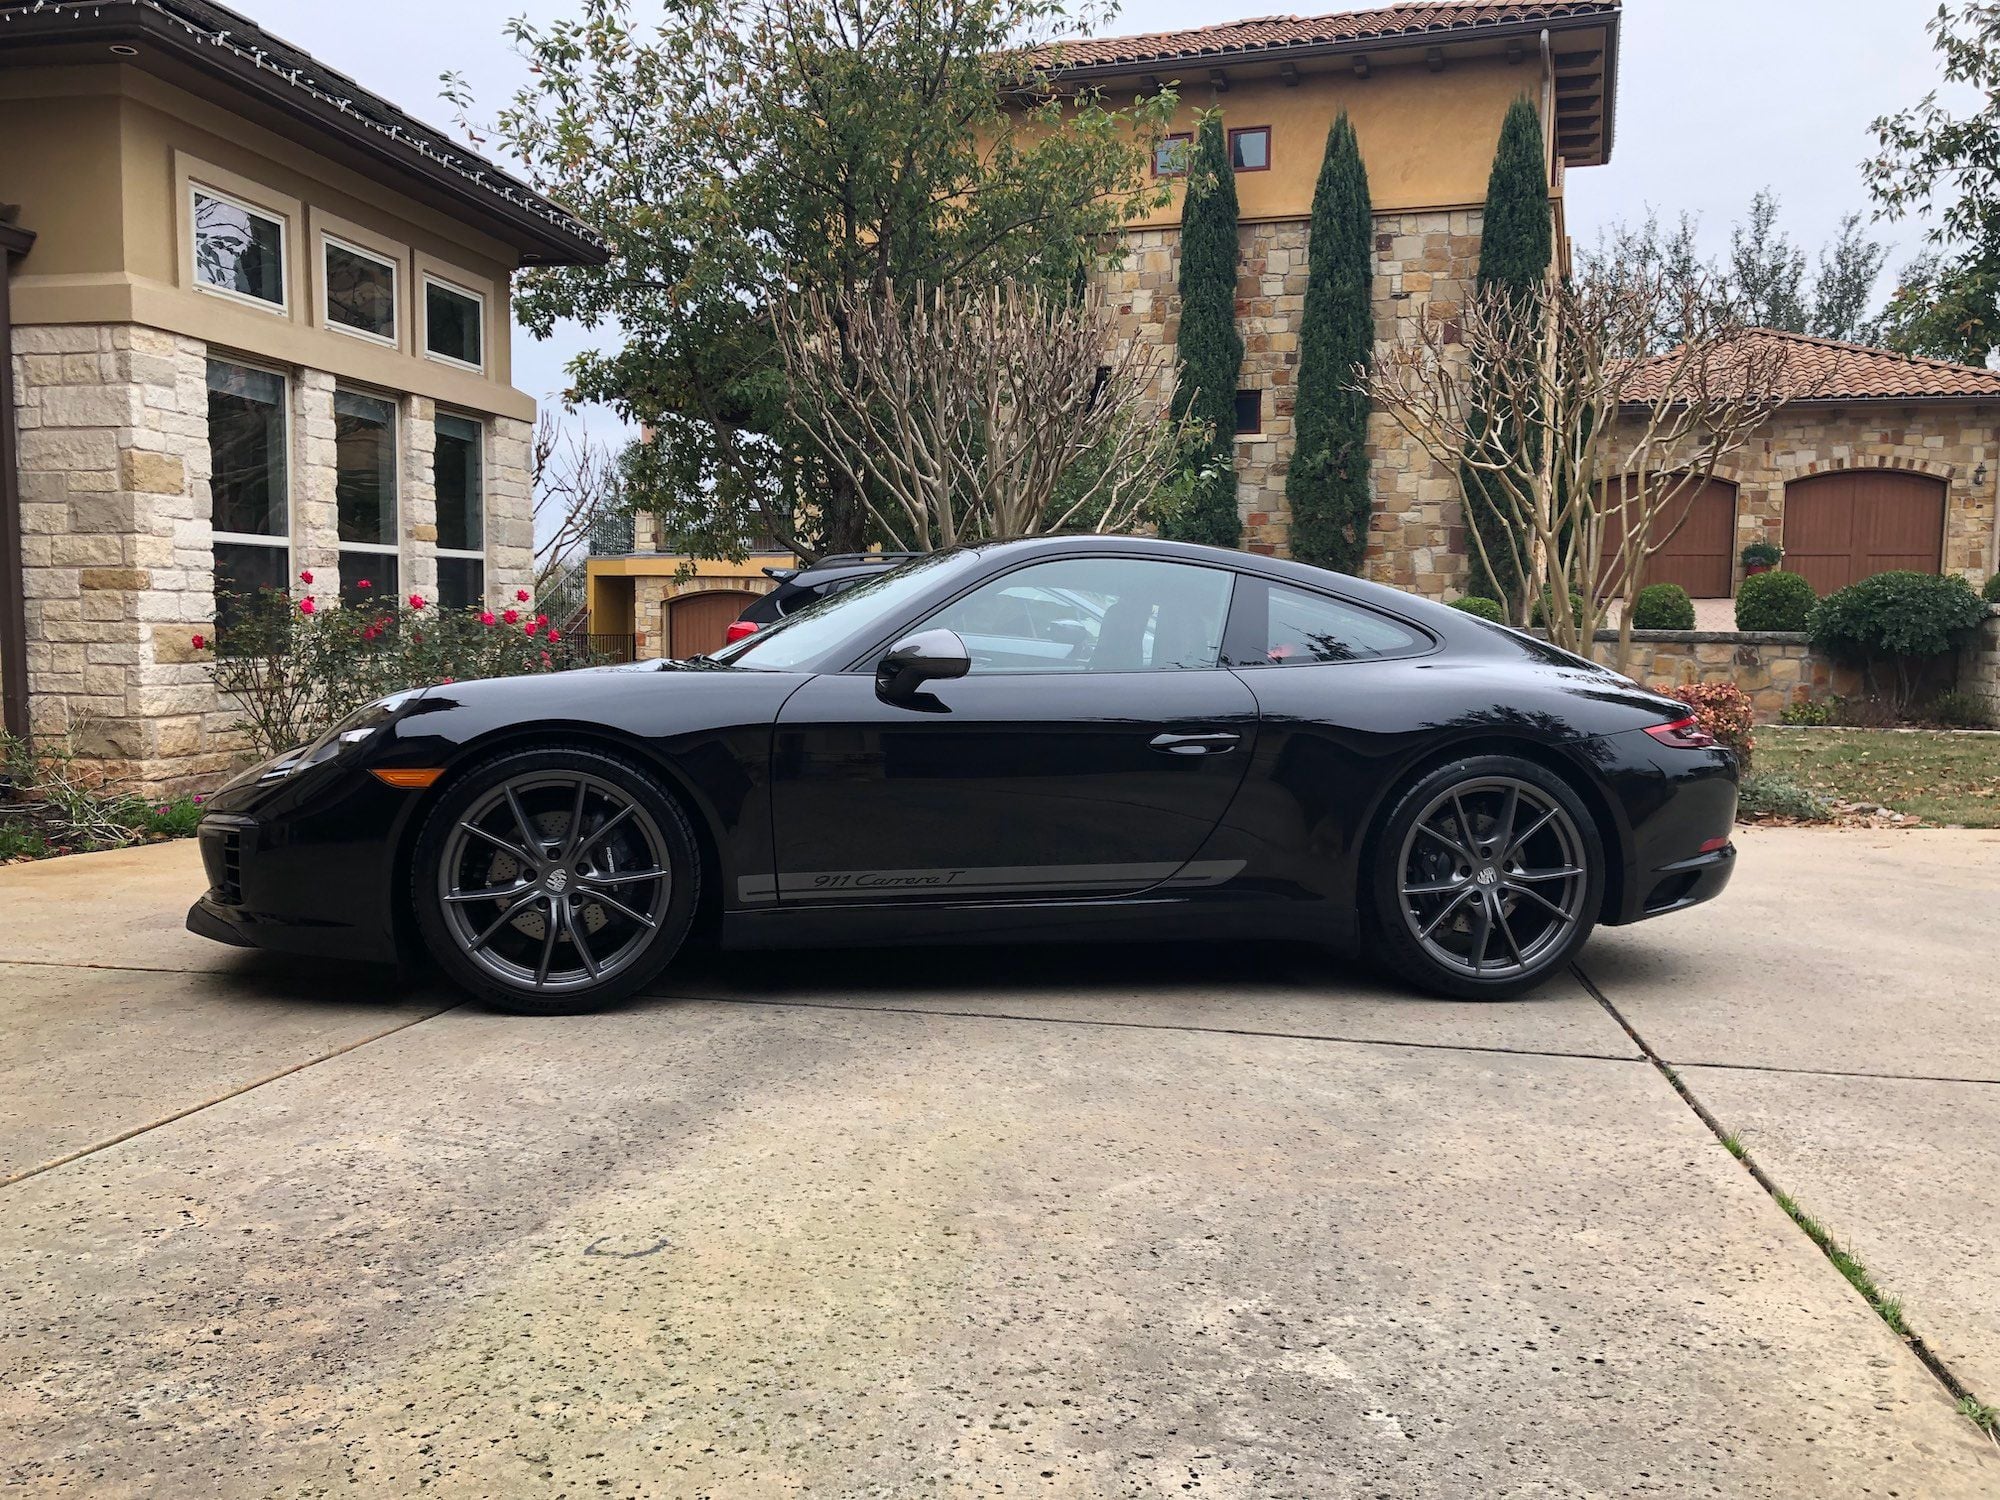 2019 Porsche GT3 - 2019 Porsche 911 T - Used - VIN WP0AA2A94KS104122 - 600 Miles - 6 cyl - 2WD - Manual - Coupe - Black - Austin, TX 78738, United States